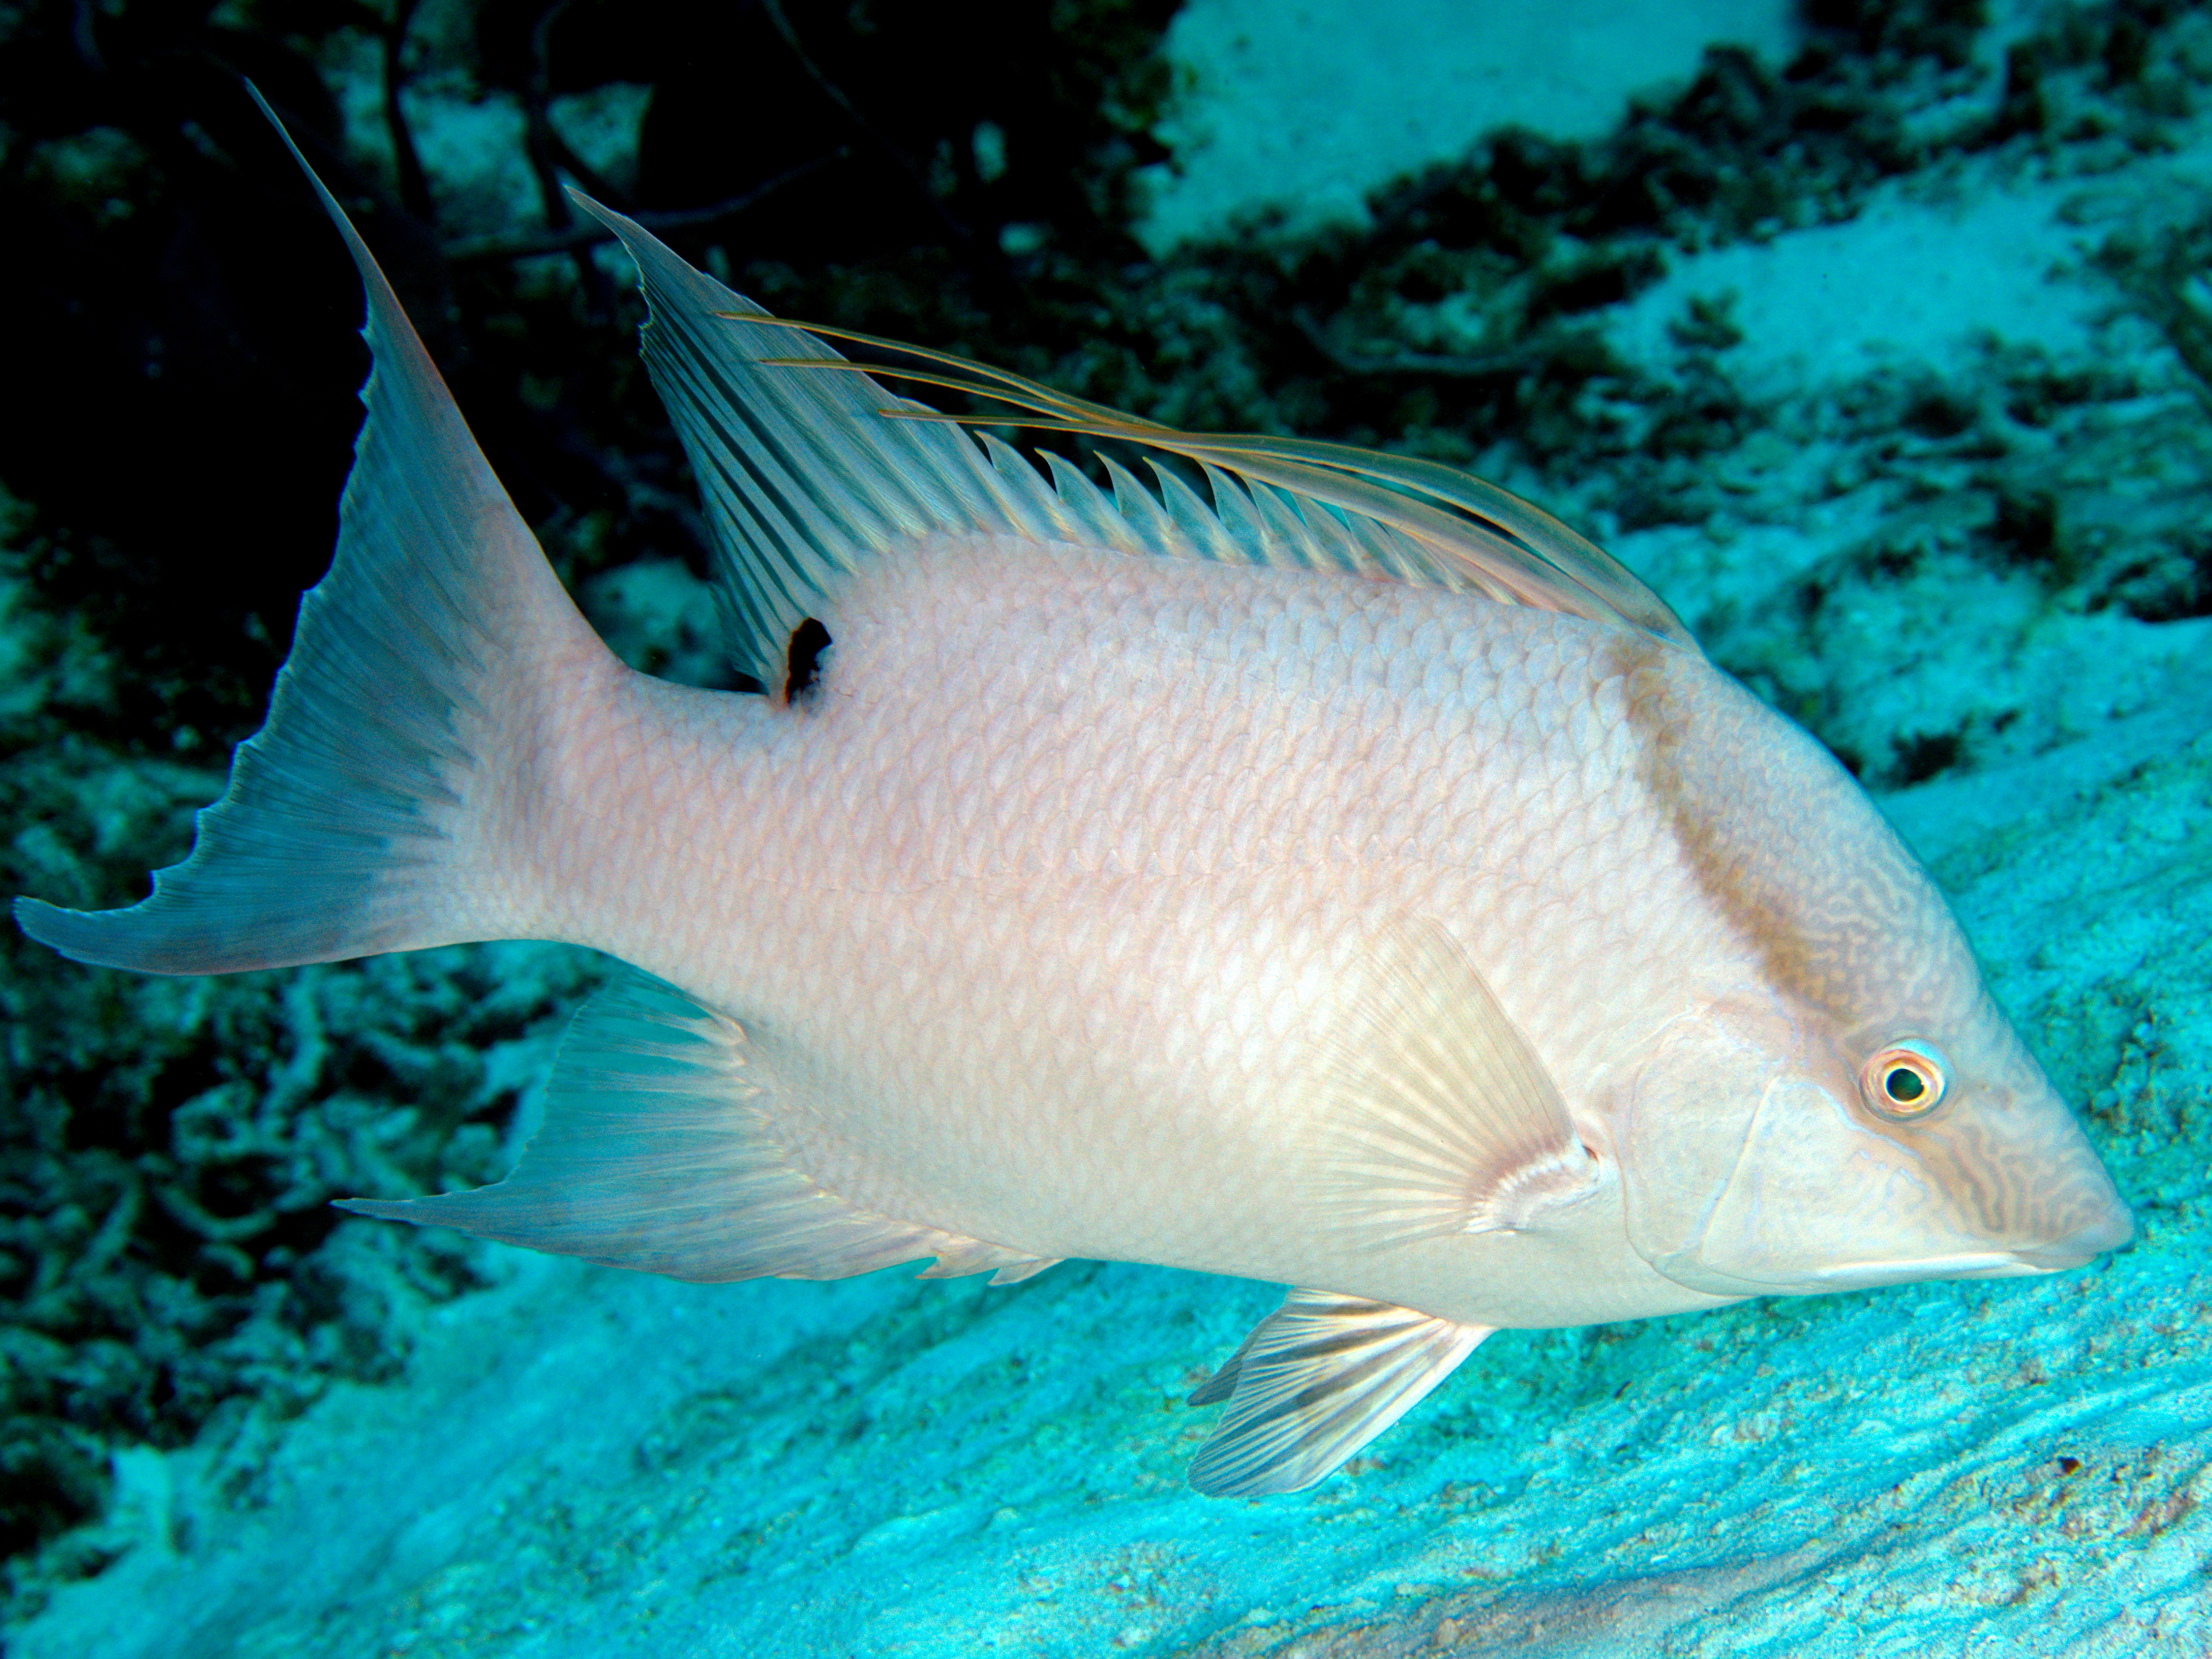 Hogfish - Lachnolaimus maximus